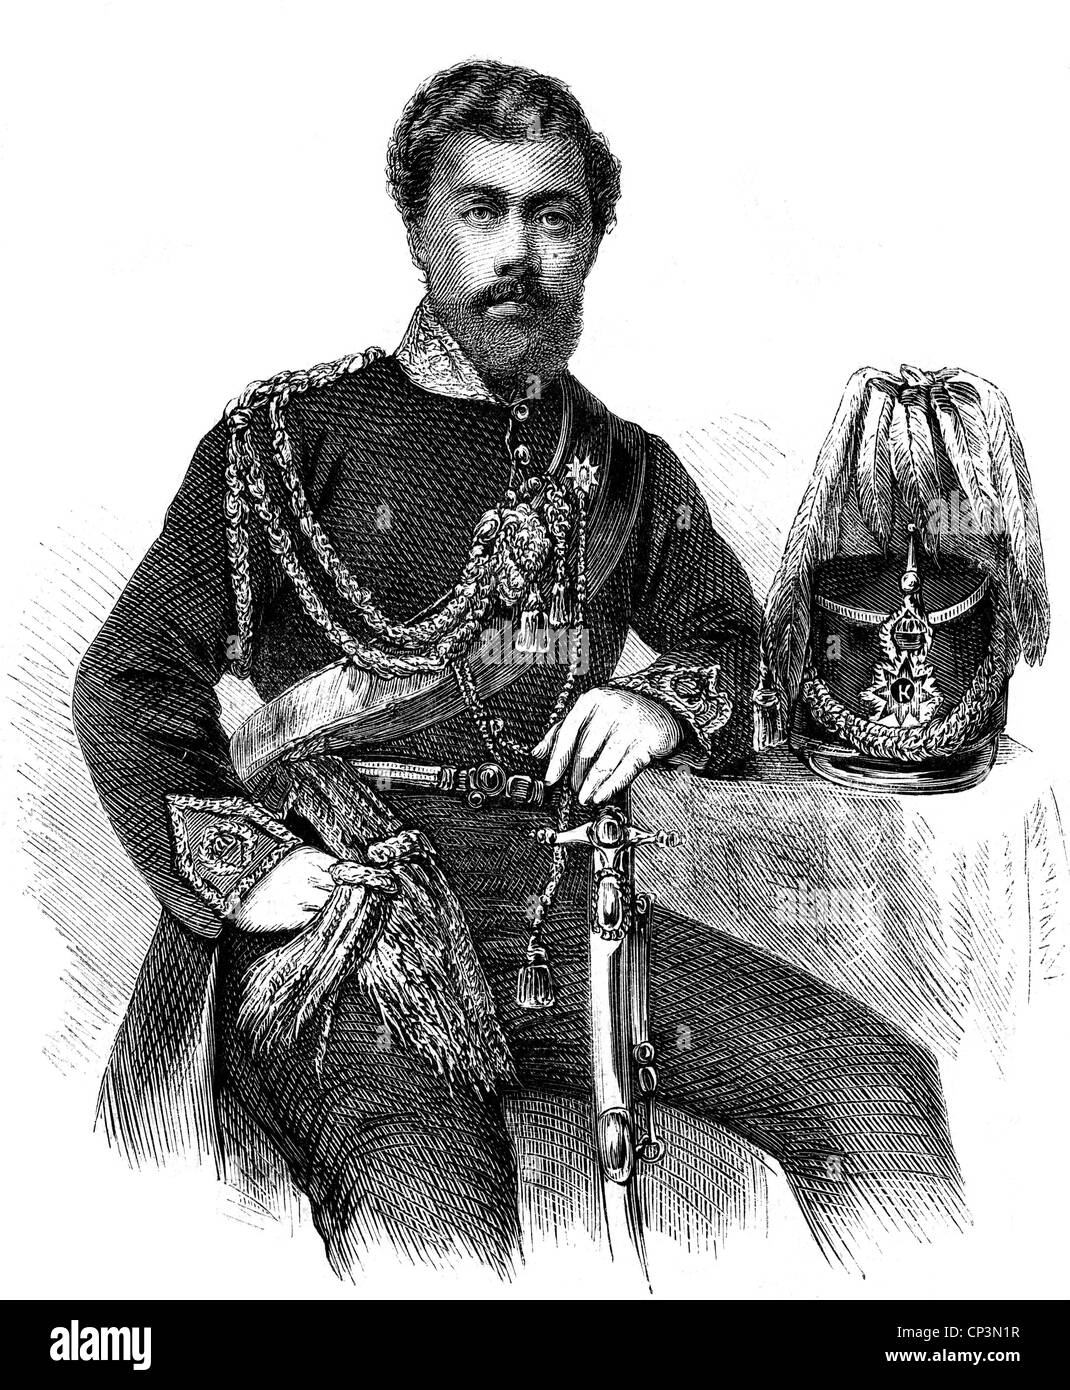 Lunalilo, William Charles, 31.1.1835 - 3.2.1874, King of the Hawaiian Islands 1873 - 1874, half length, in uniform, wood engraving, 1873/1874, Stock Photo